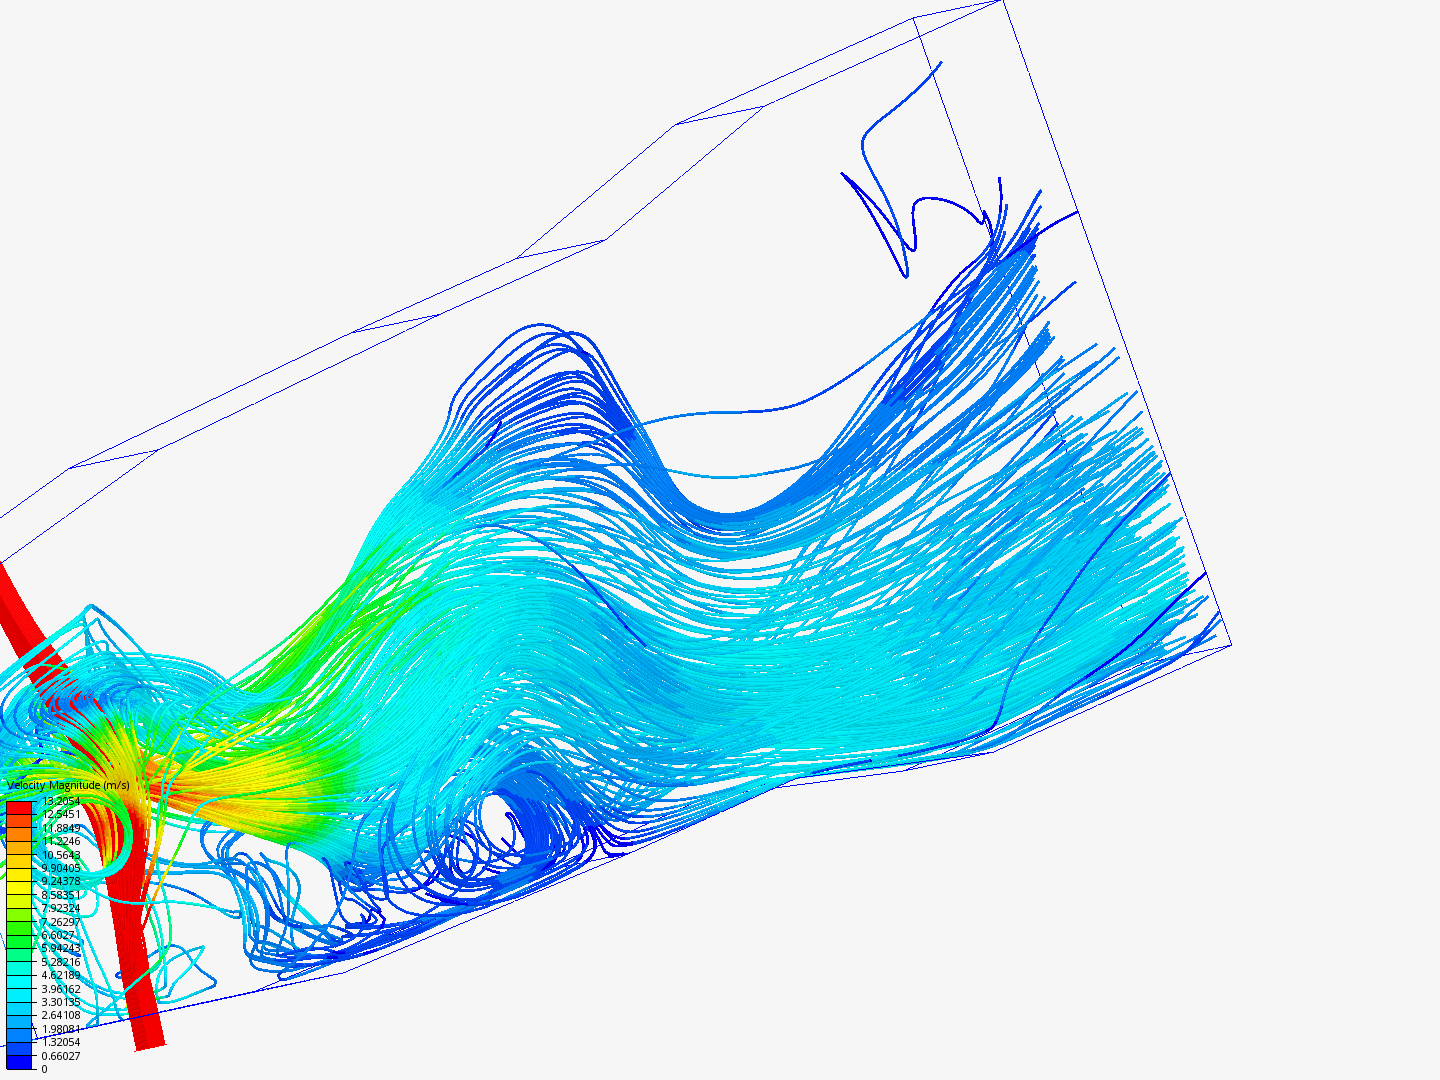 Velocity profile in bicarbonate discharge image